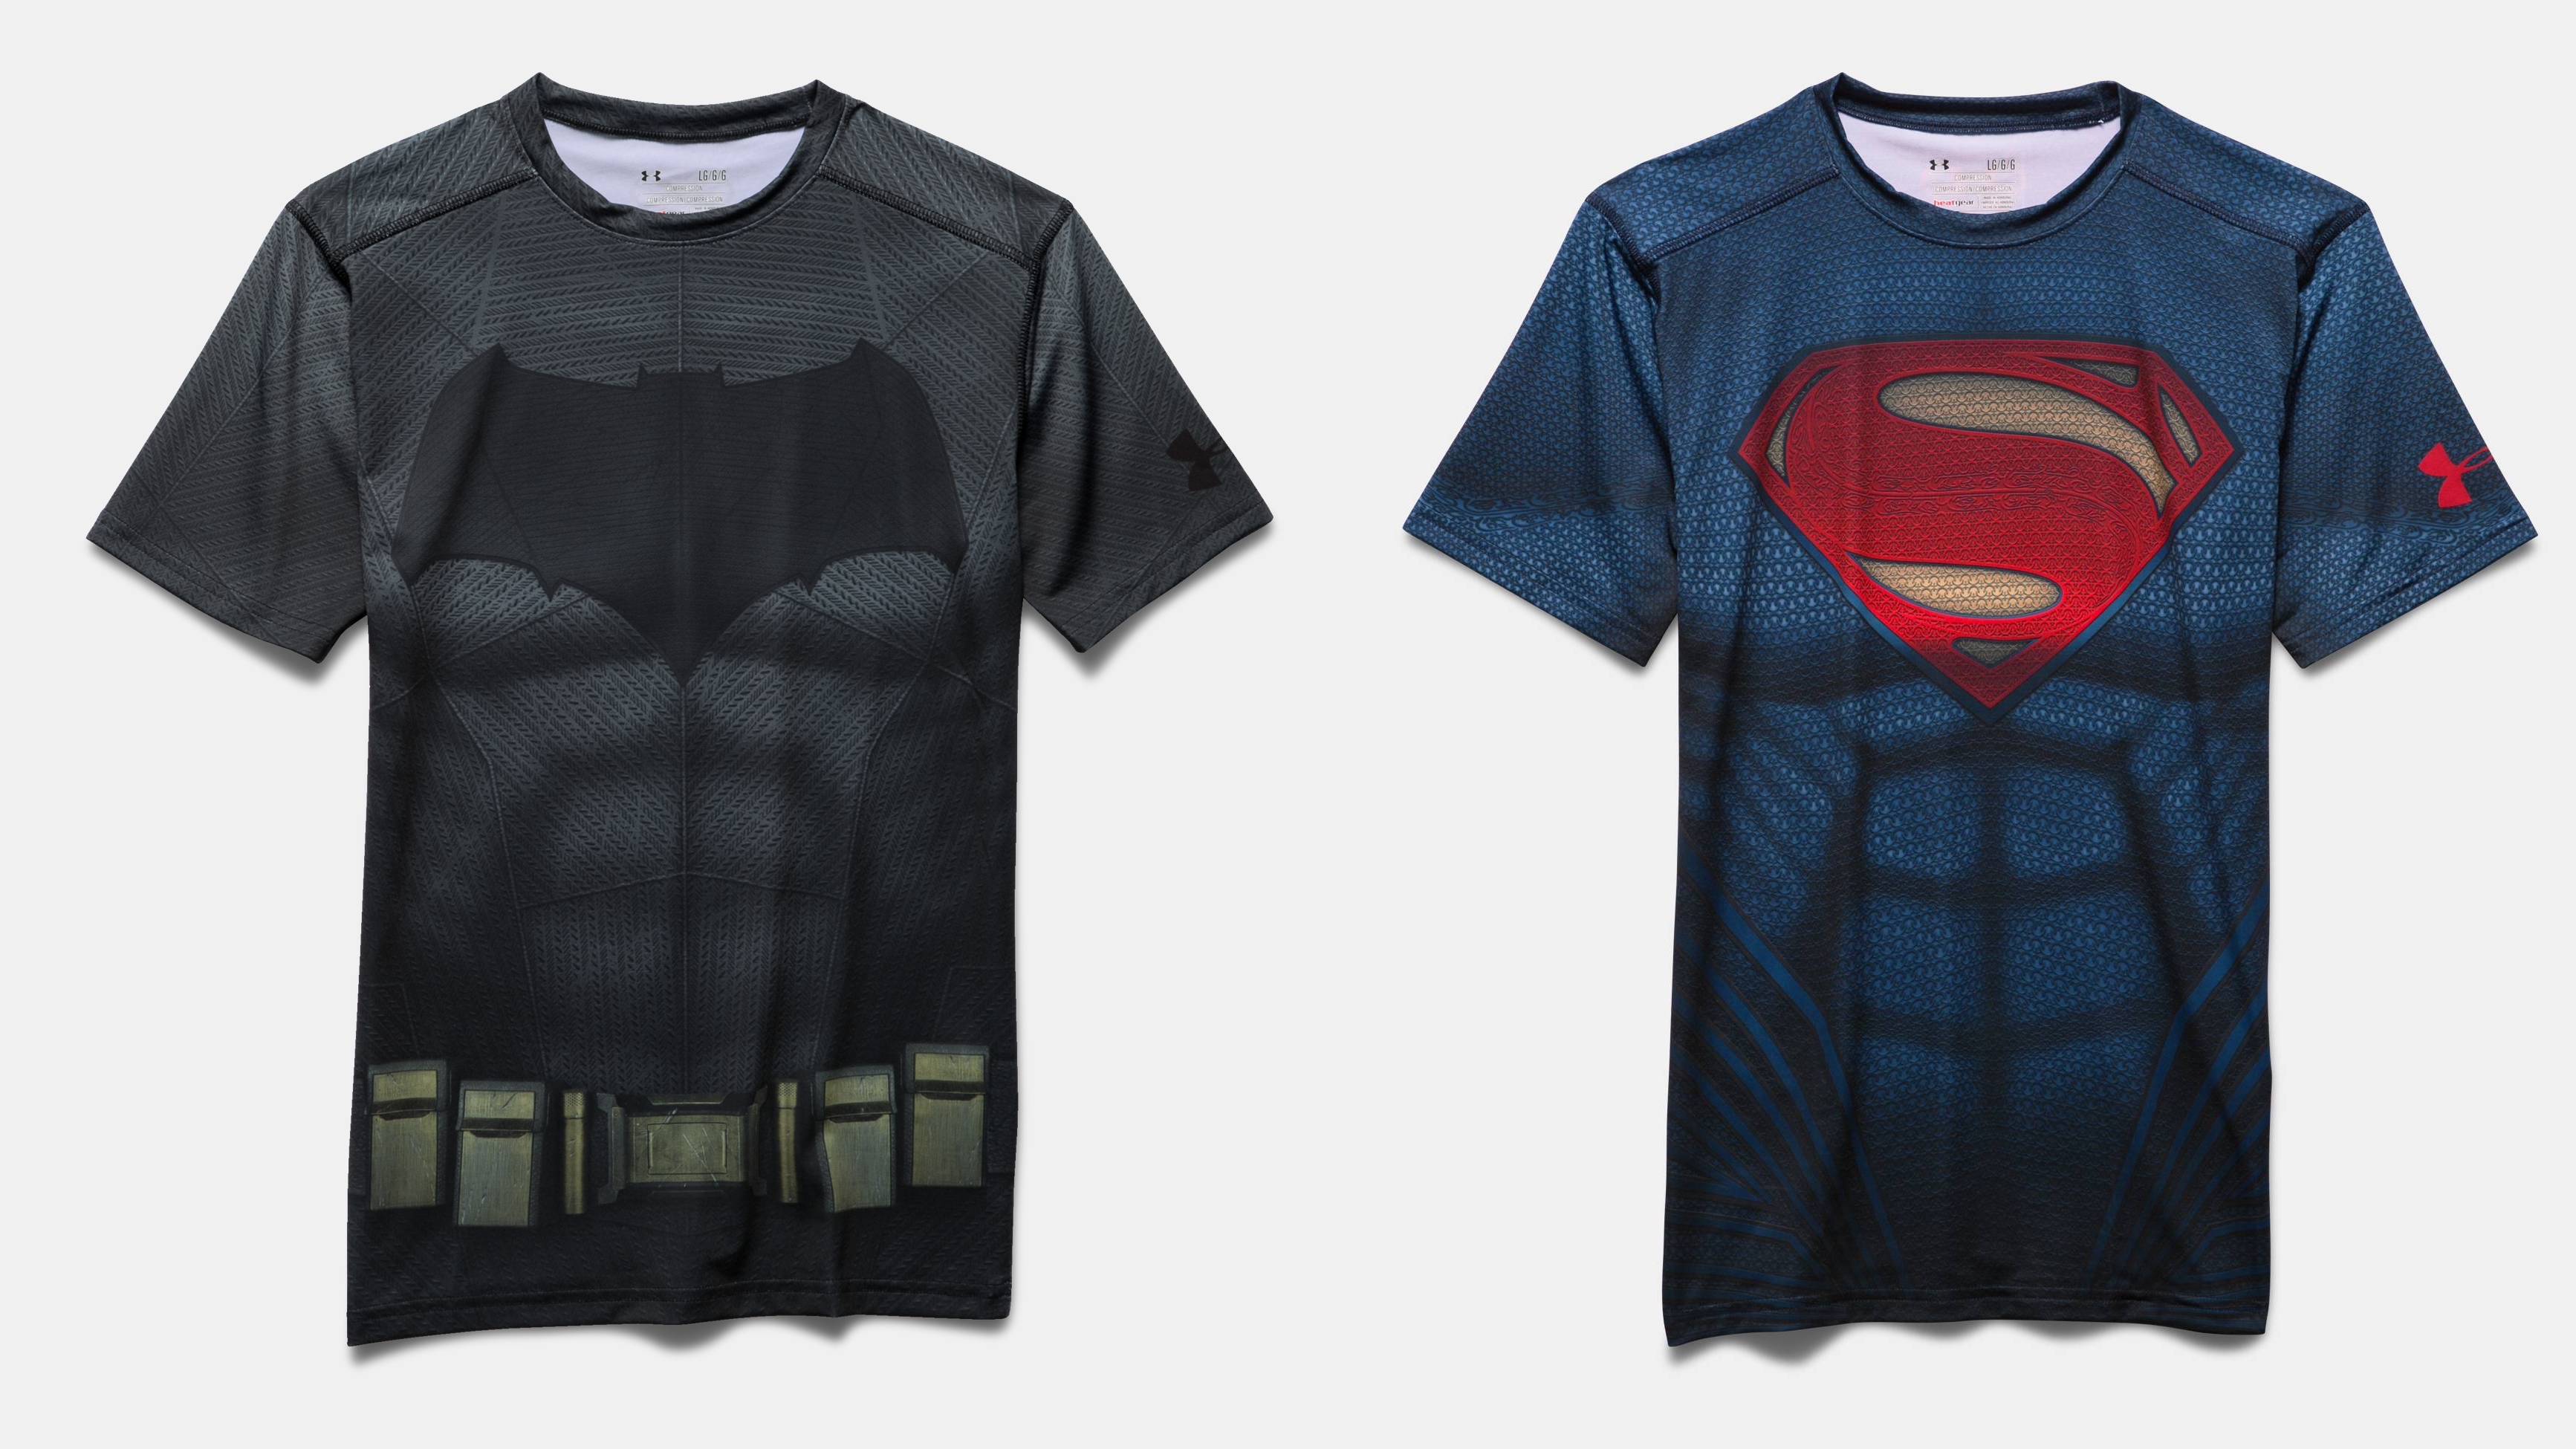 asustado Seguro estaño Under Armour launches 'Batman v Superman' merchandise | Batman News